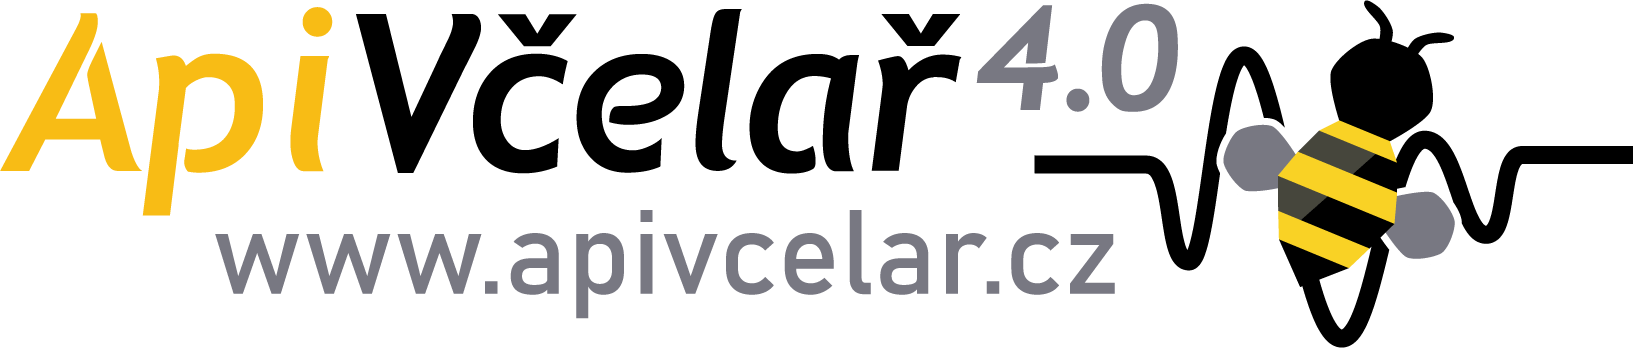 ApiVcelar 4.0 logo